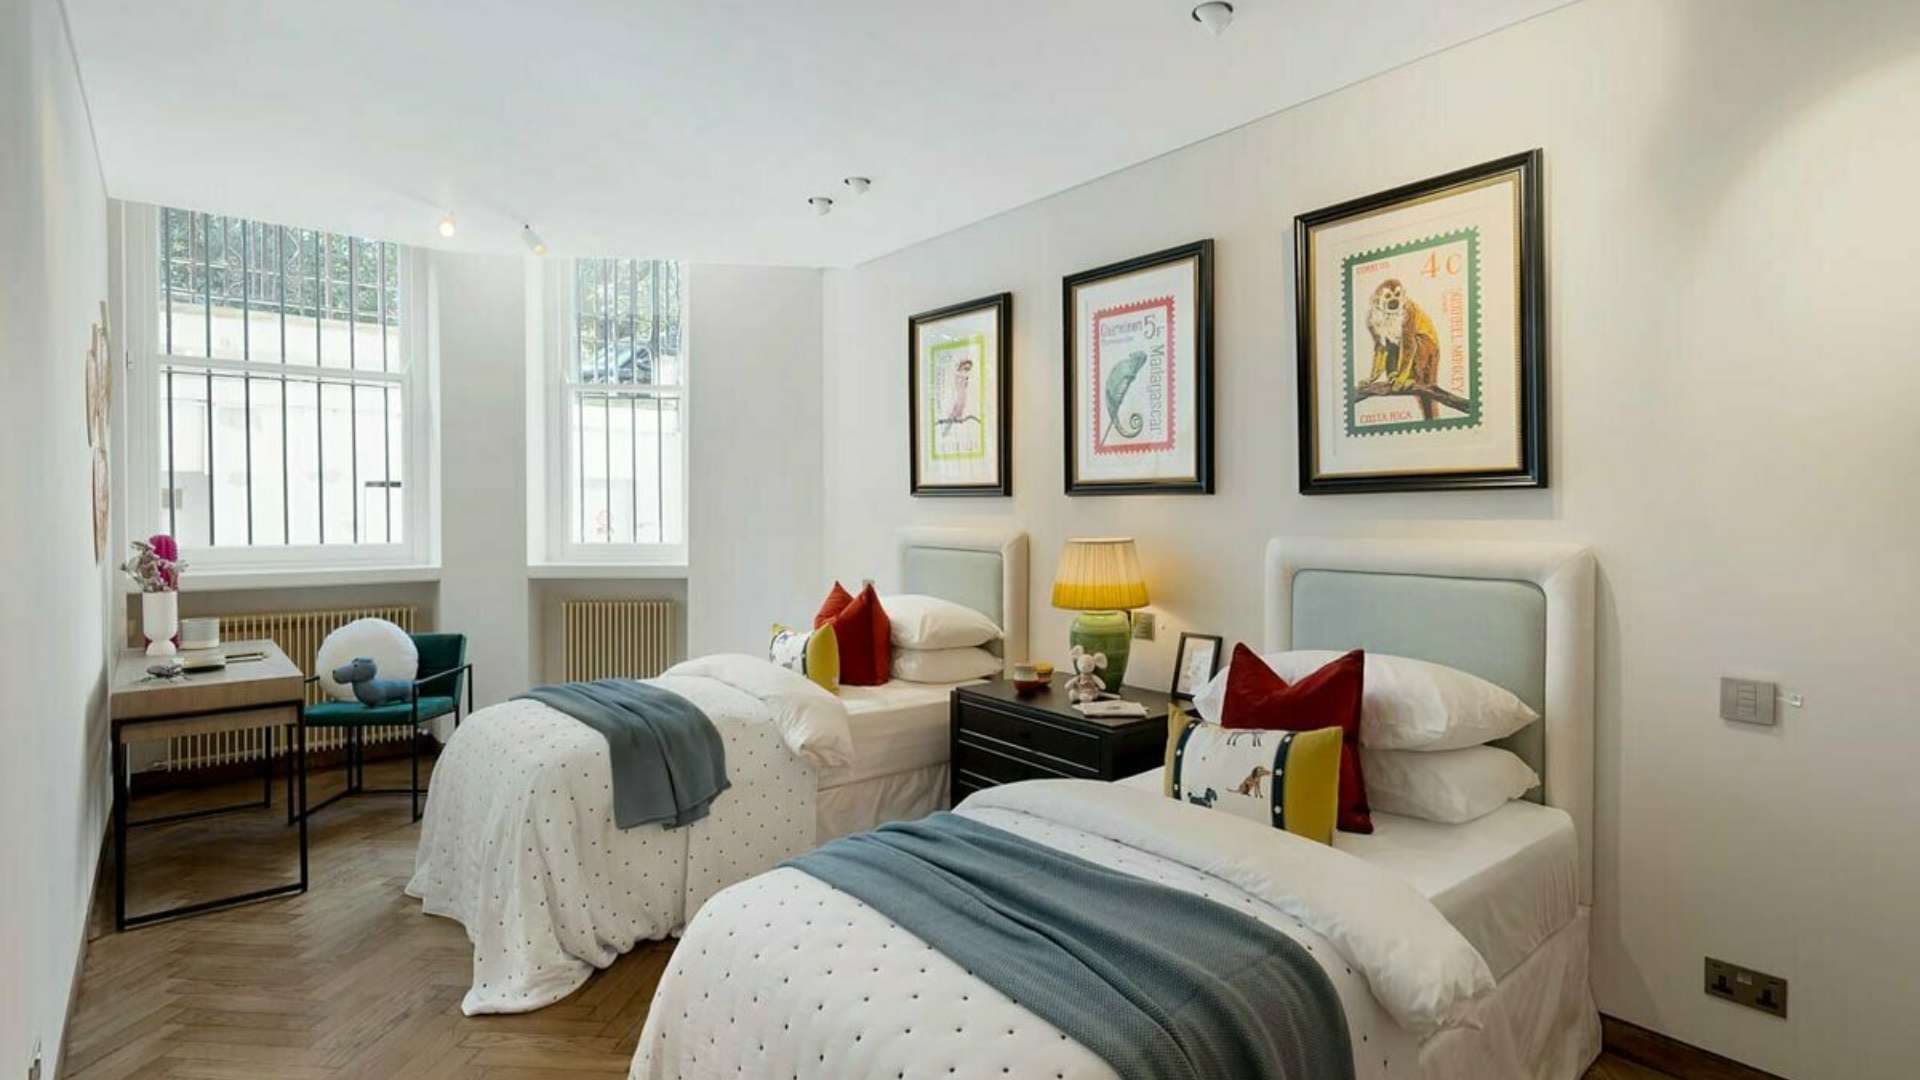 5 Bedroom Apartment For Sale Cadogan Square London Lp10416 220f8692bcb8de00.jpg